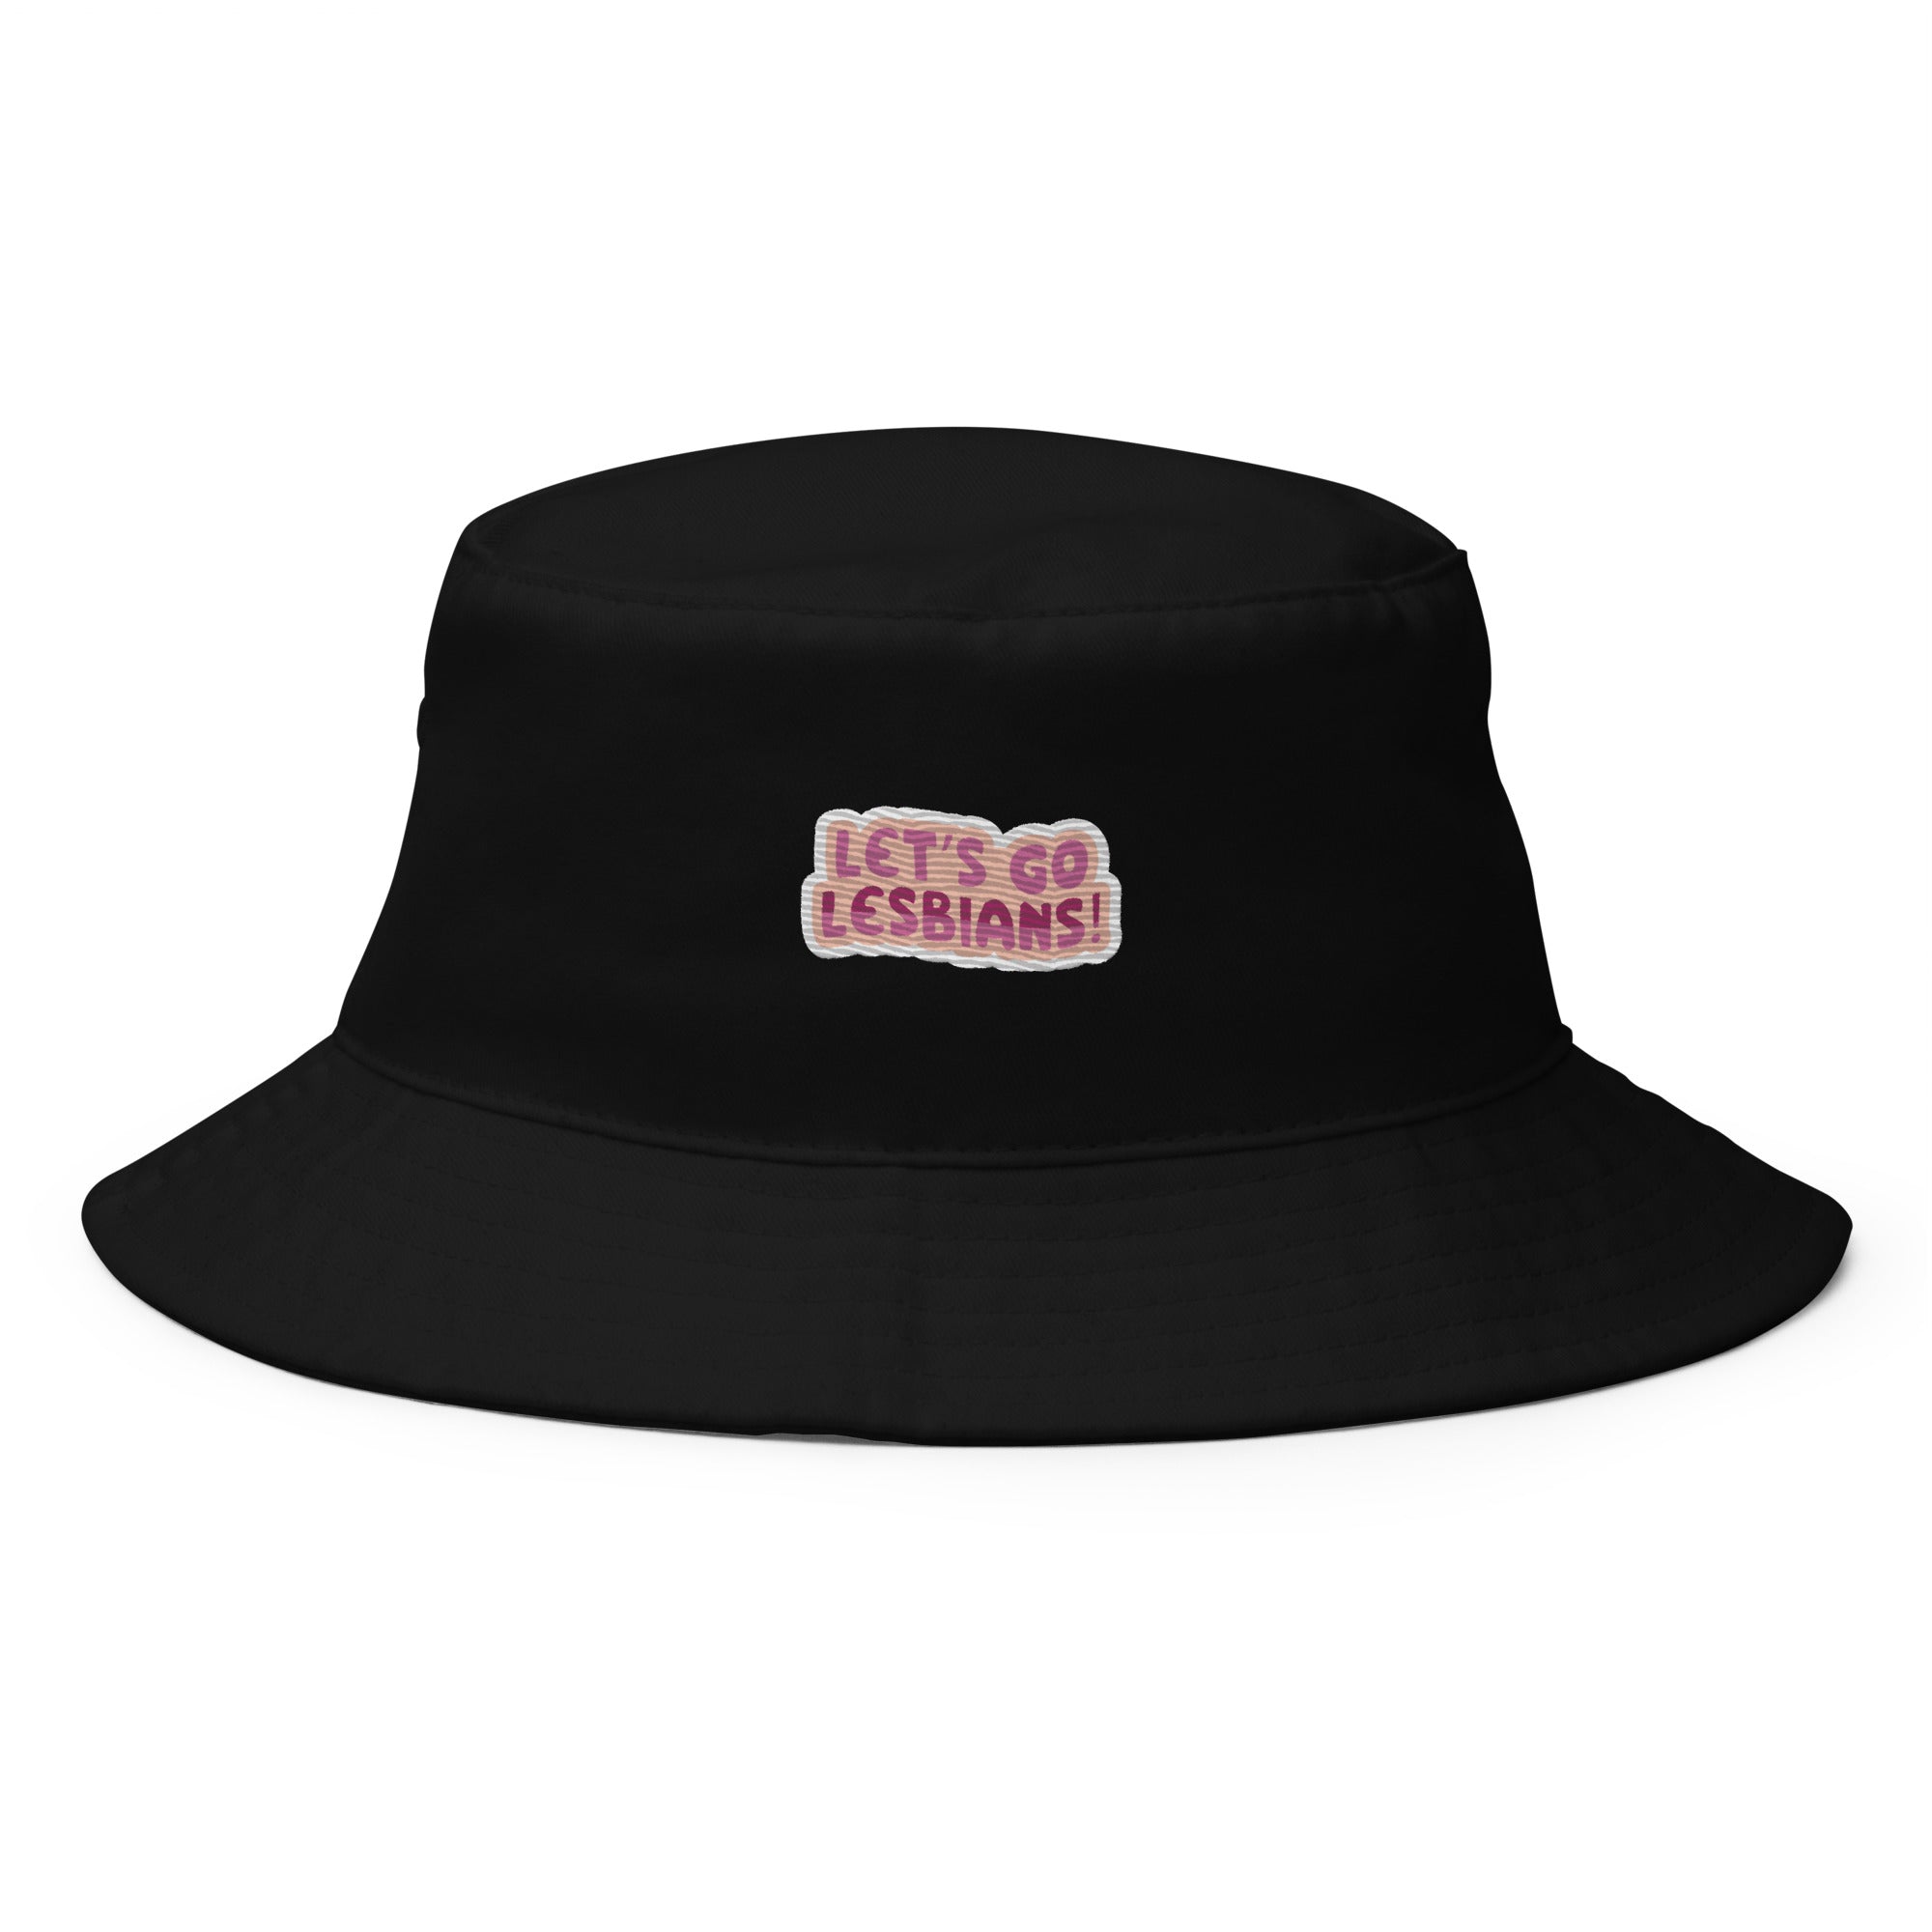 Lets go Lesbians Premium Embriodered Bucket Hat